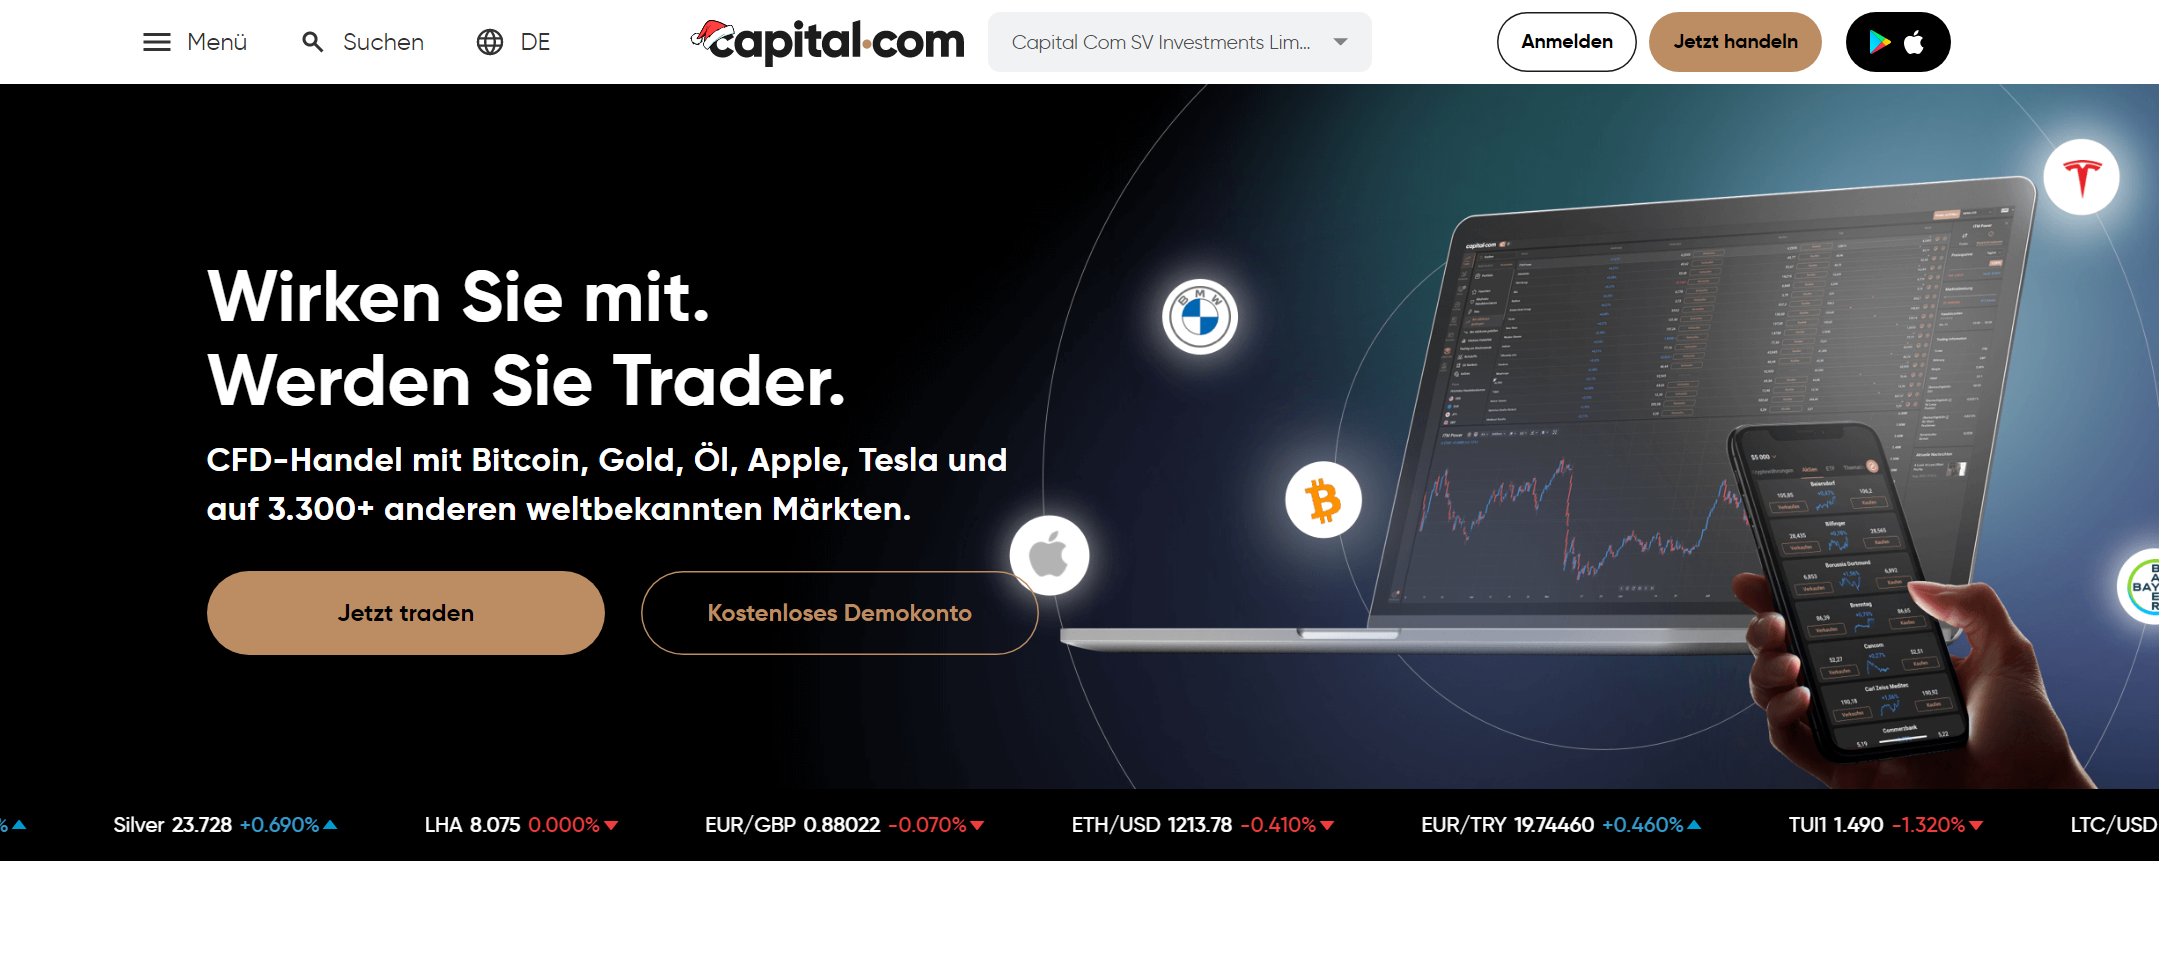 Capital.com offizielle Webseite